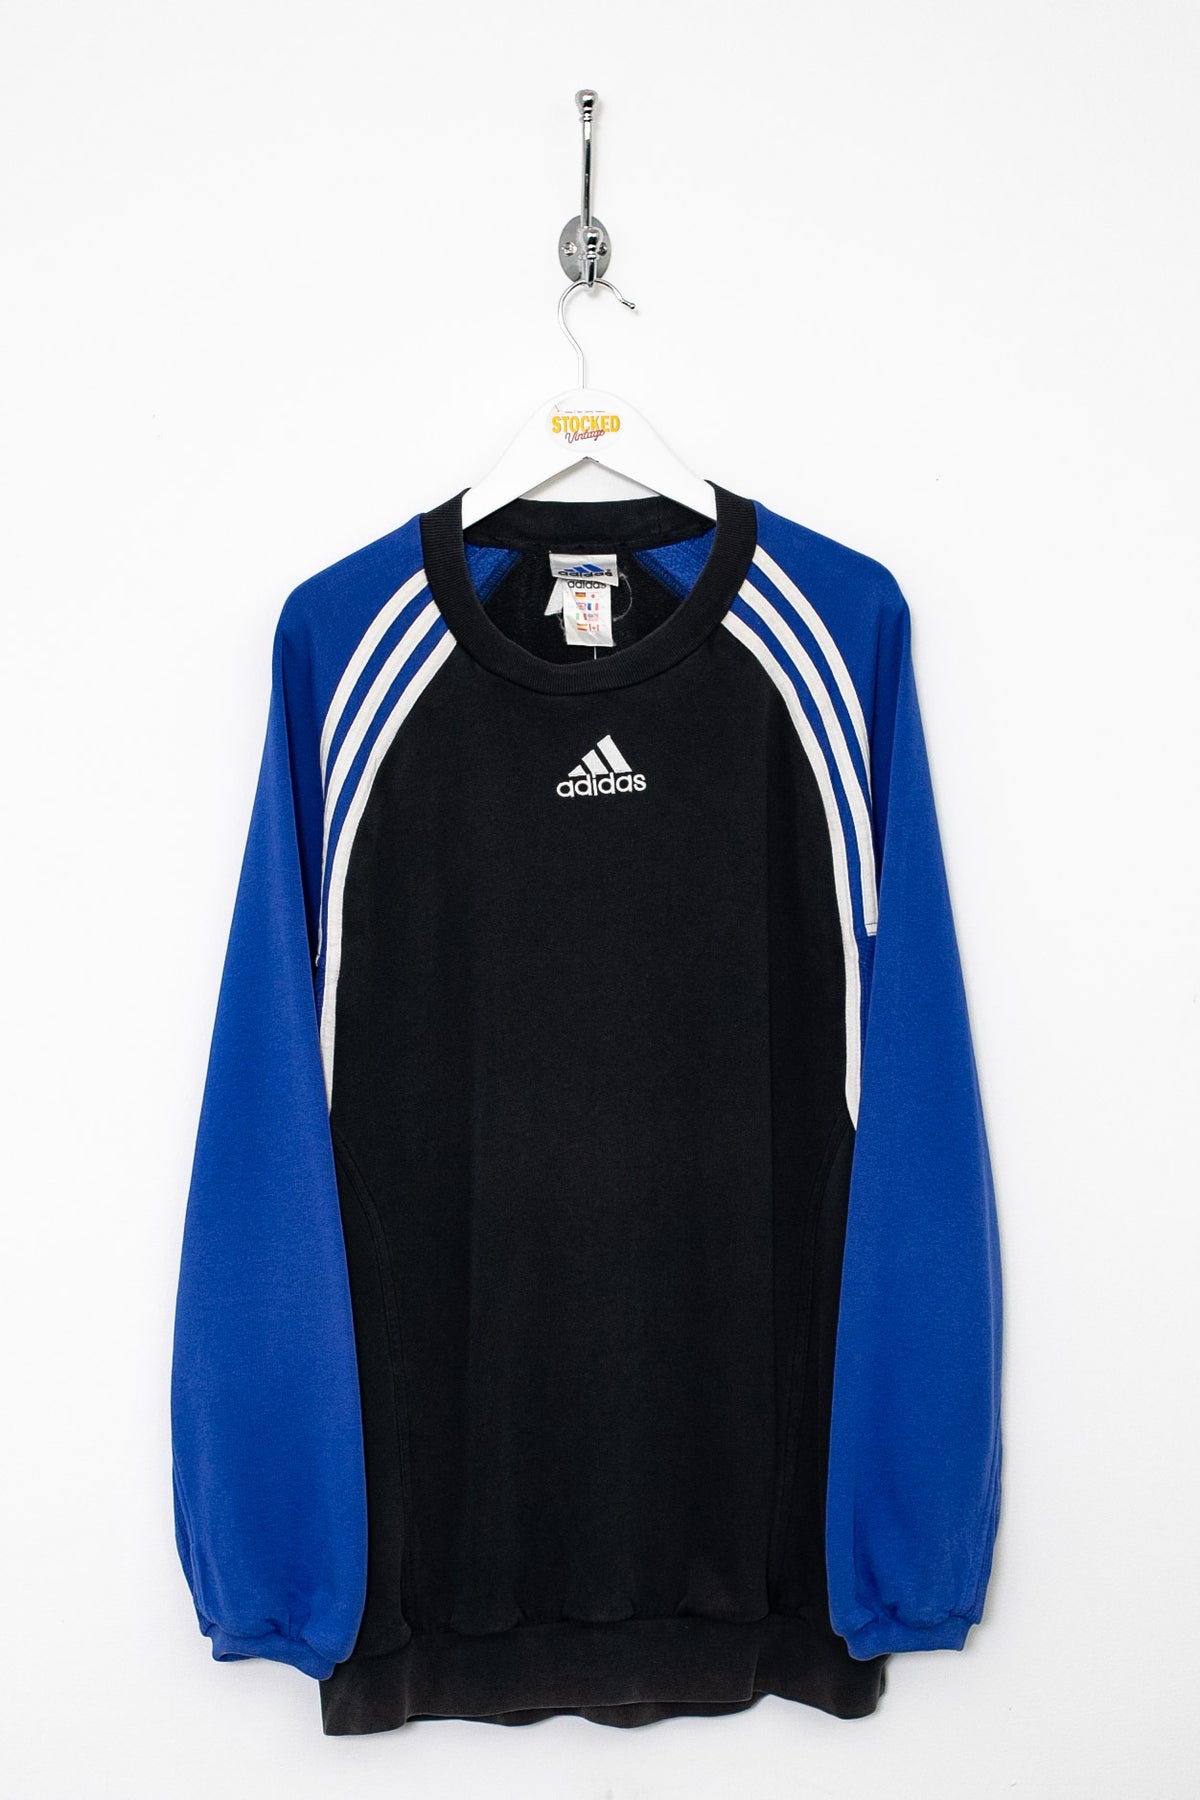 00s Adidas Sweatshirt (L)